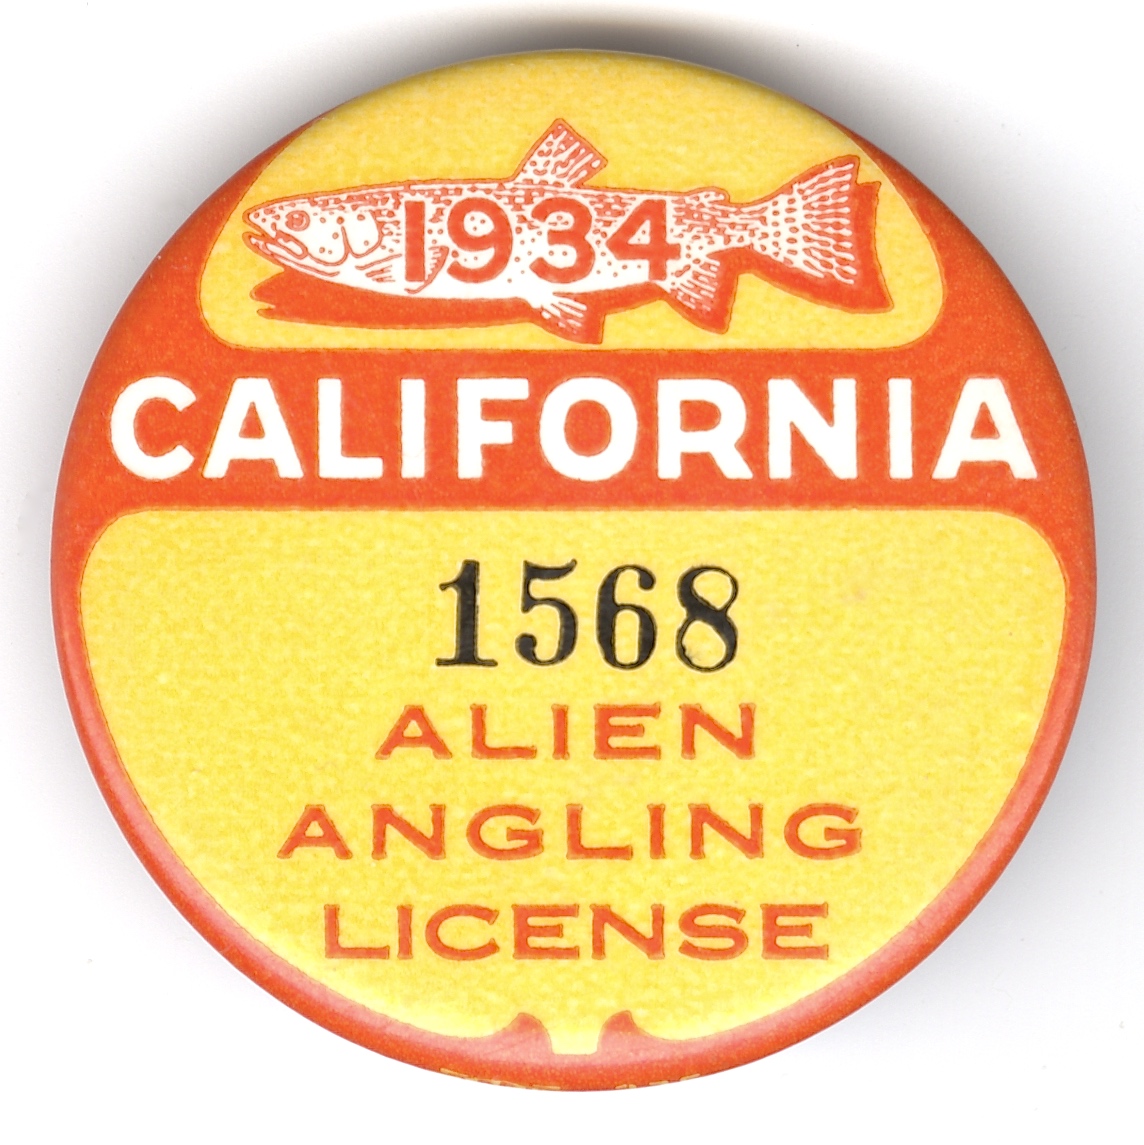 1934 Alien Fishing License Button California